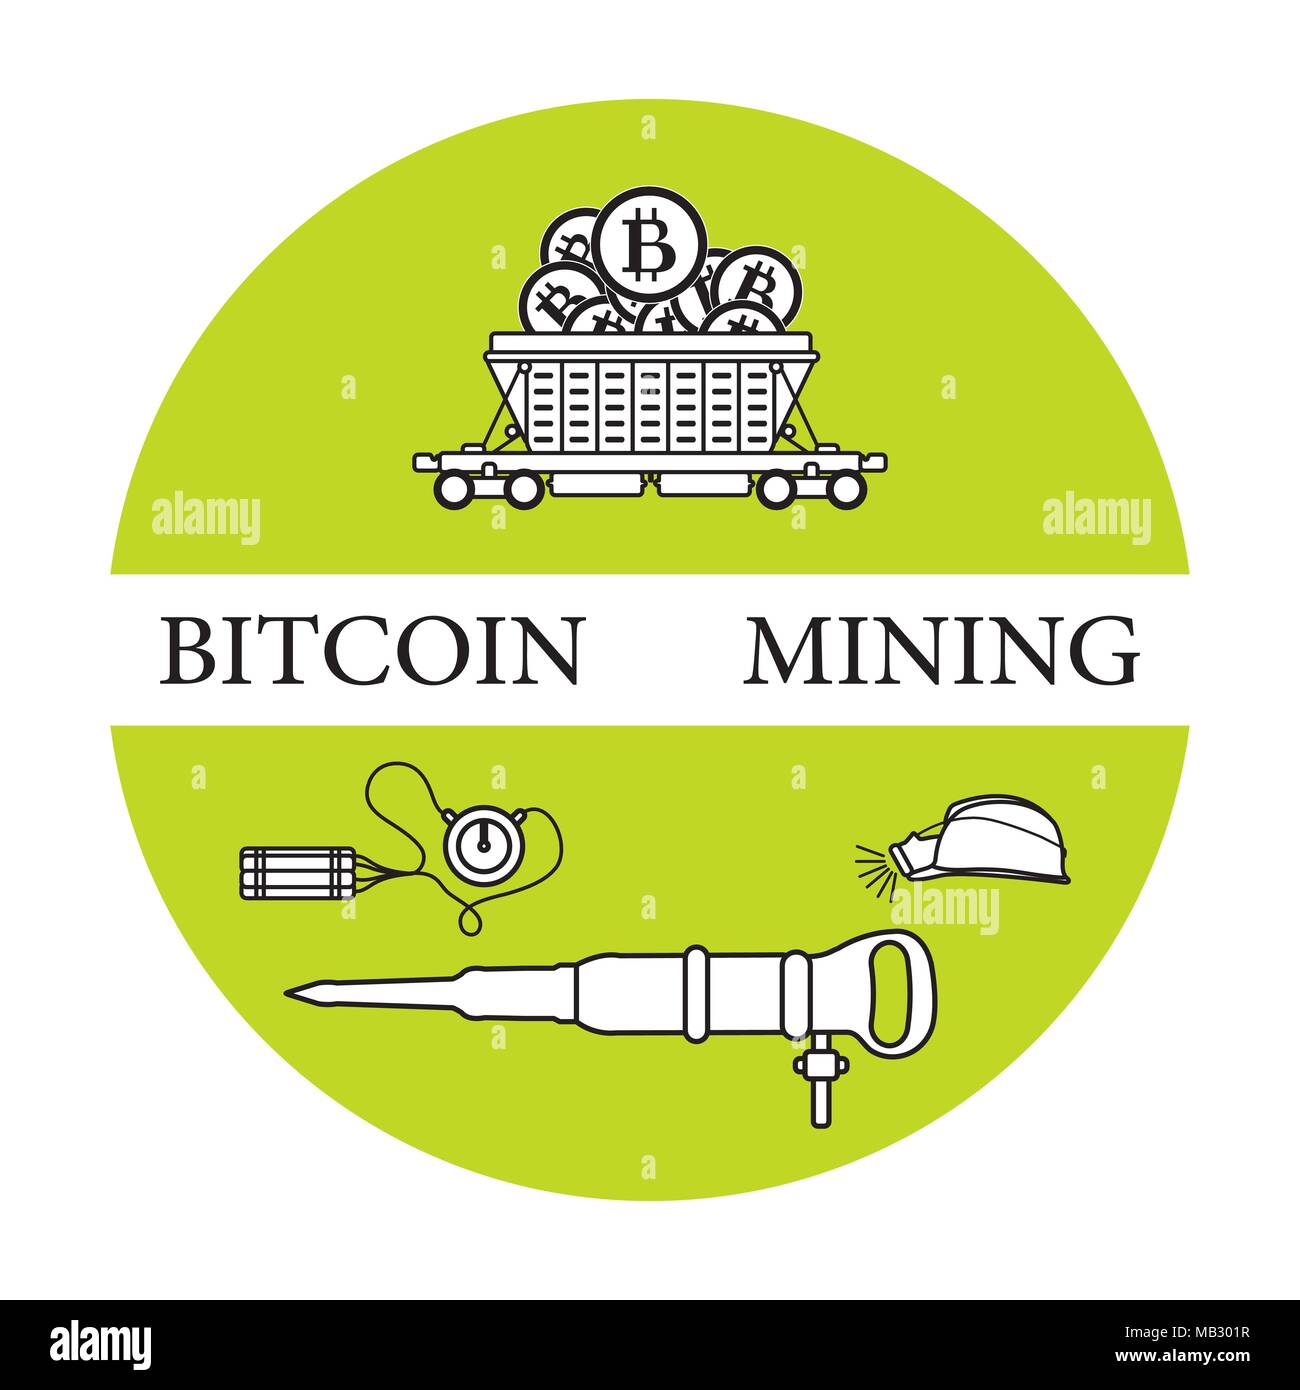 Bitcoin mining 301